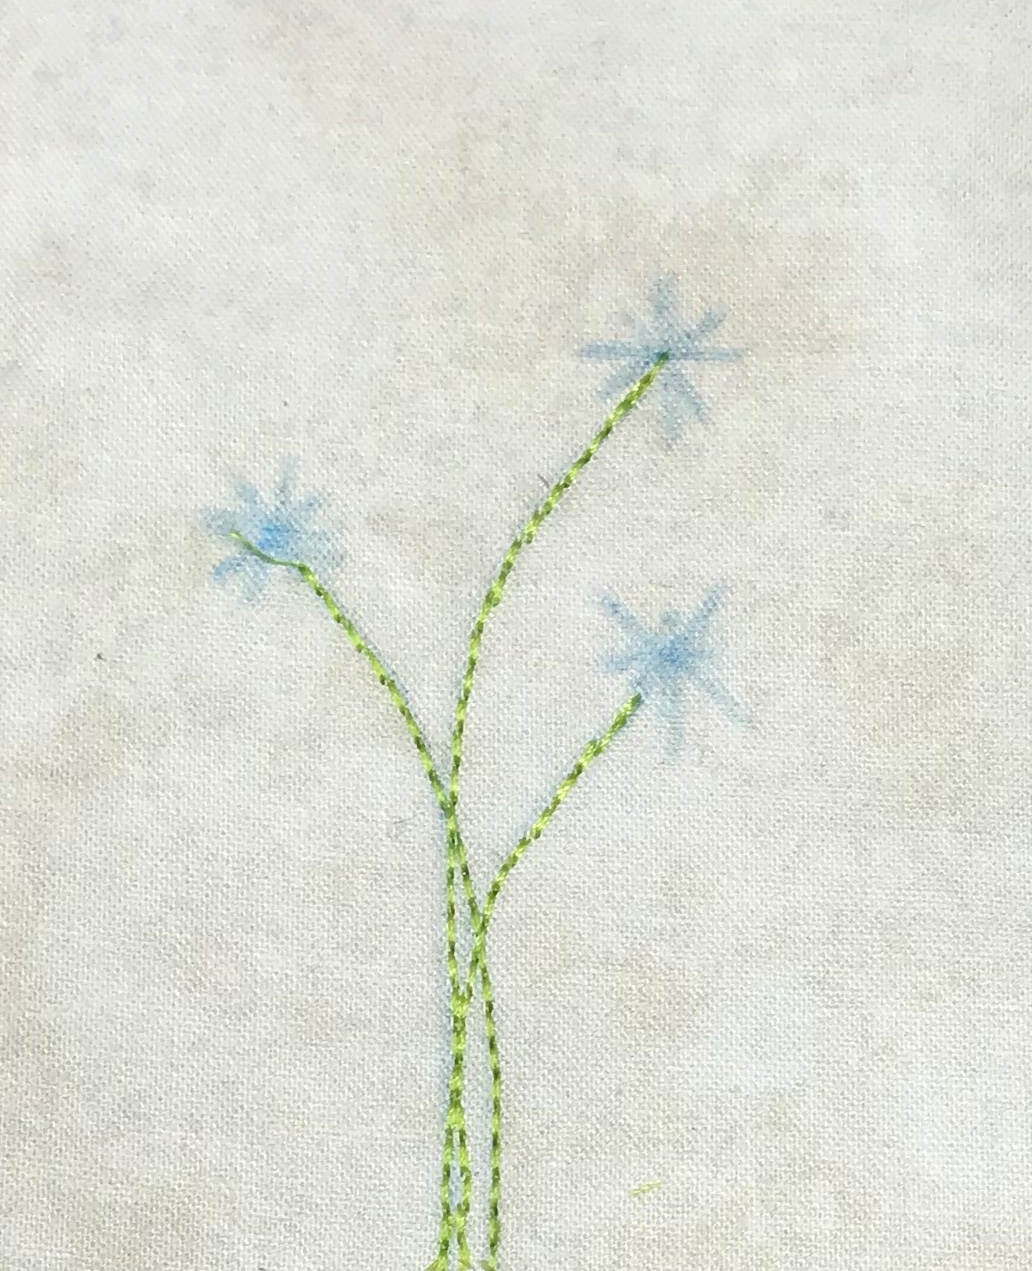 flower stems